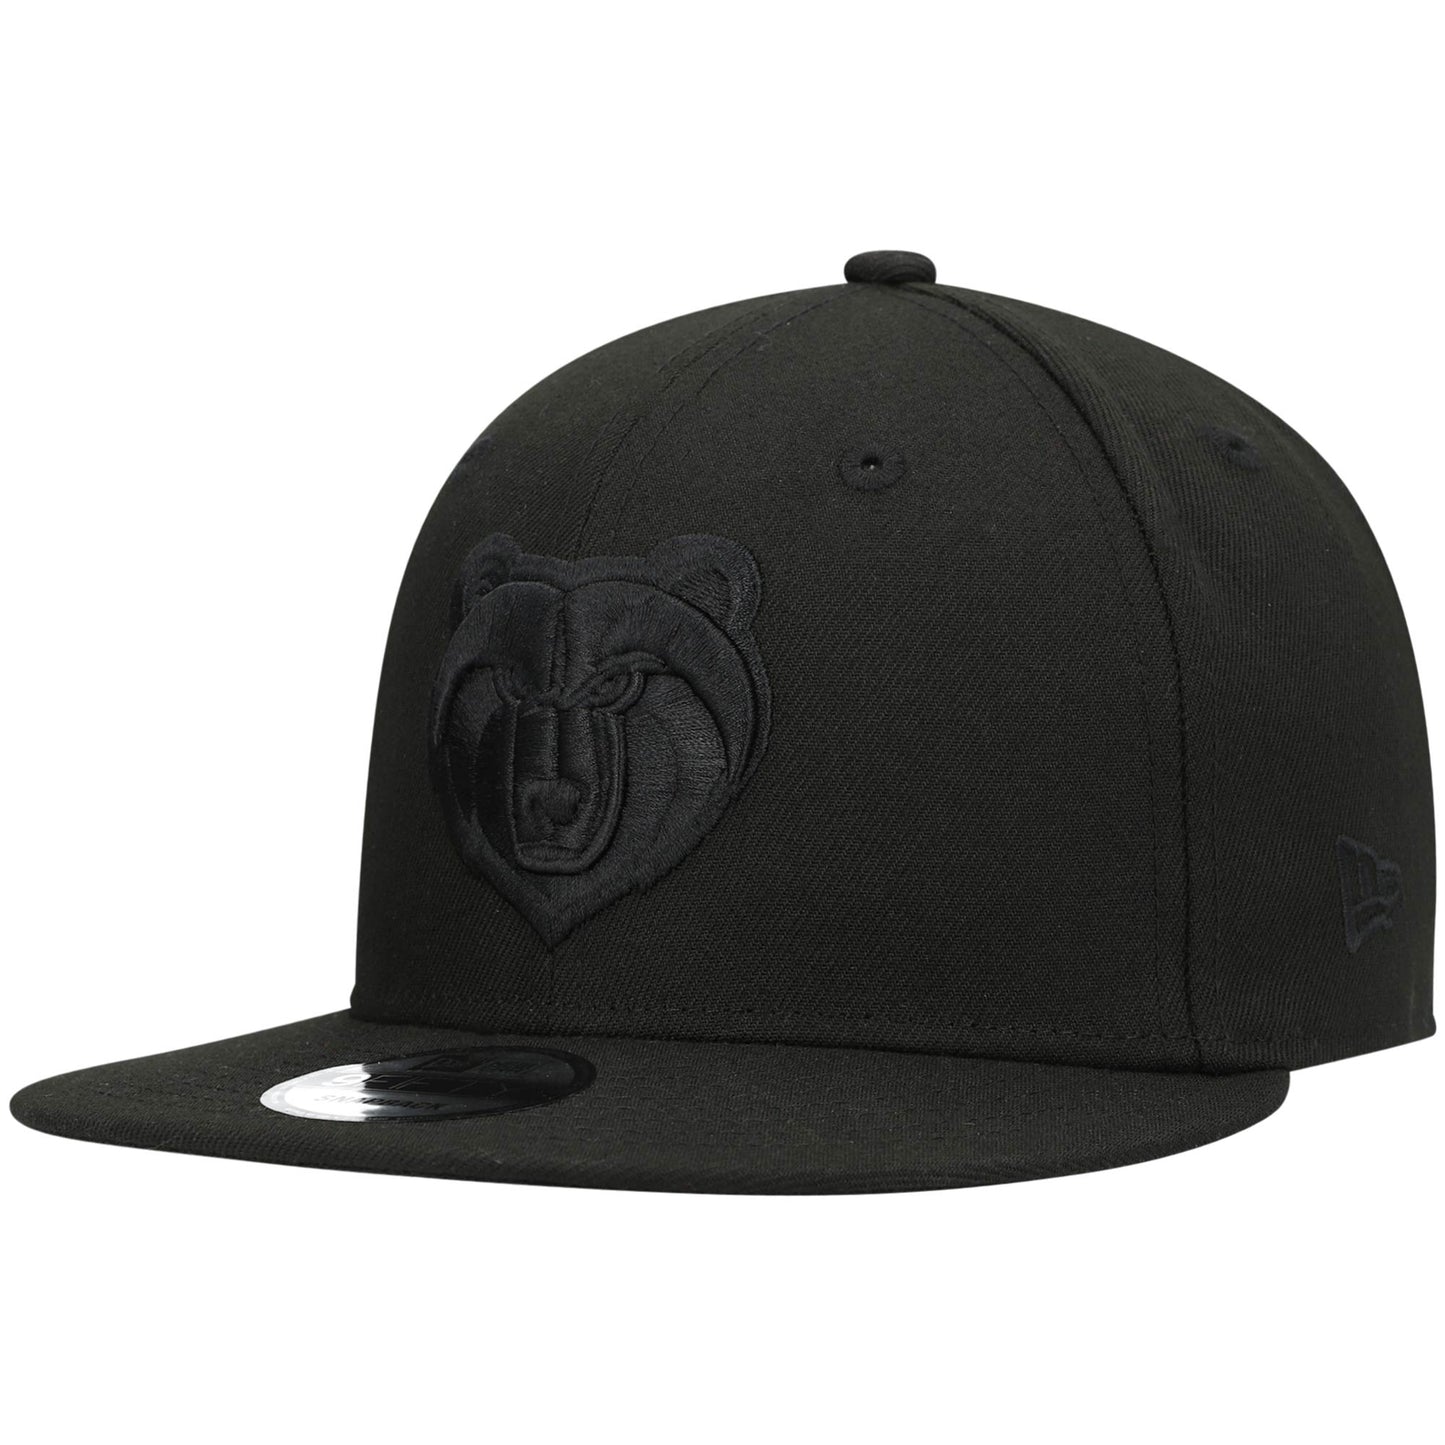 Memphis Grizzlies New Era Black On Black 9FIFTY Snapback Hat